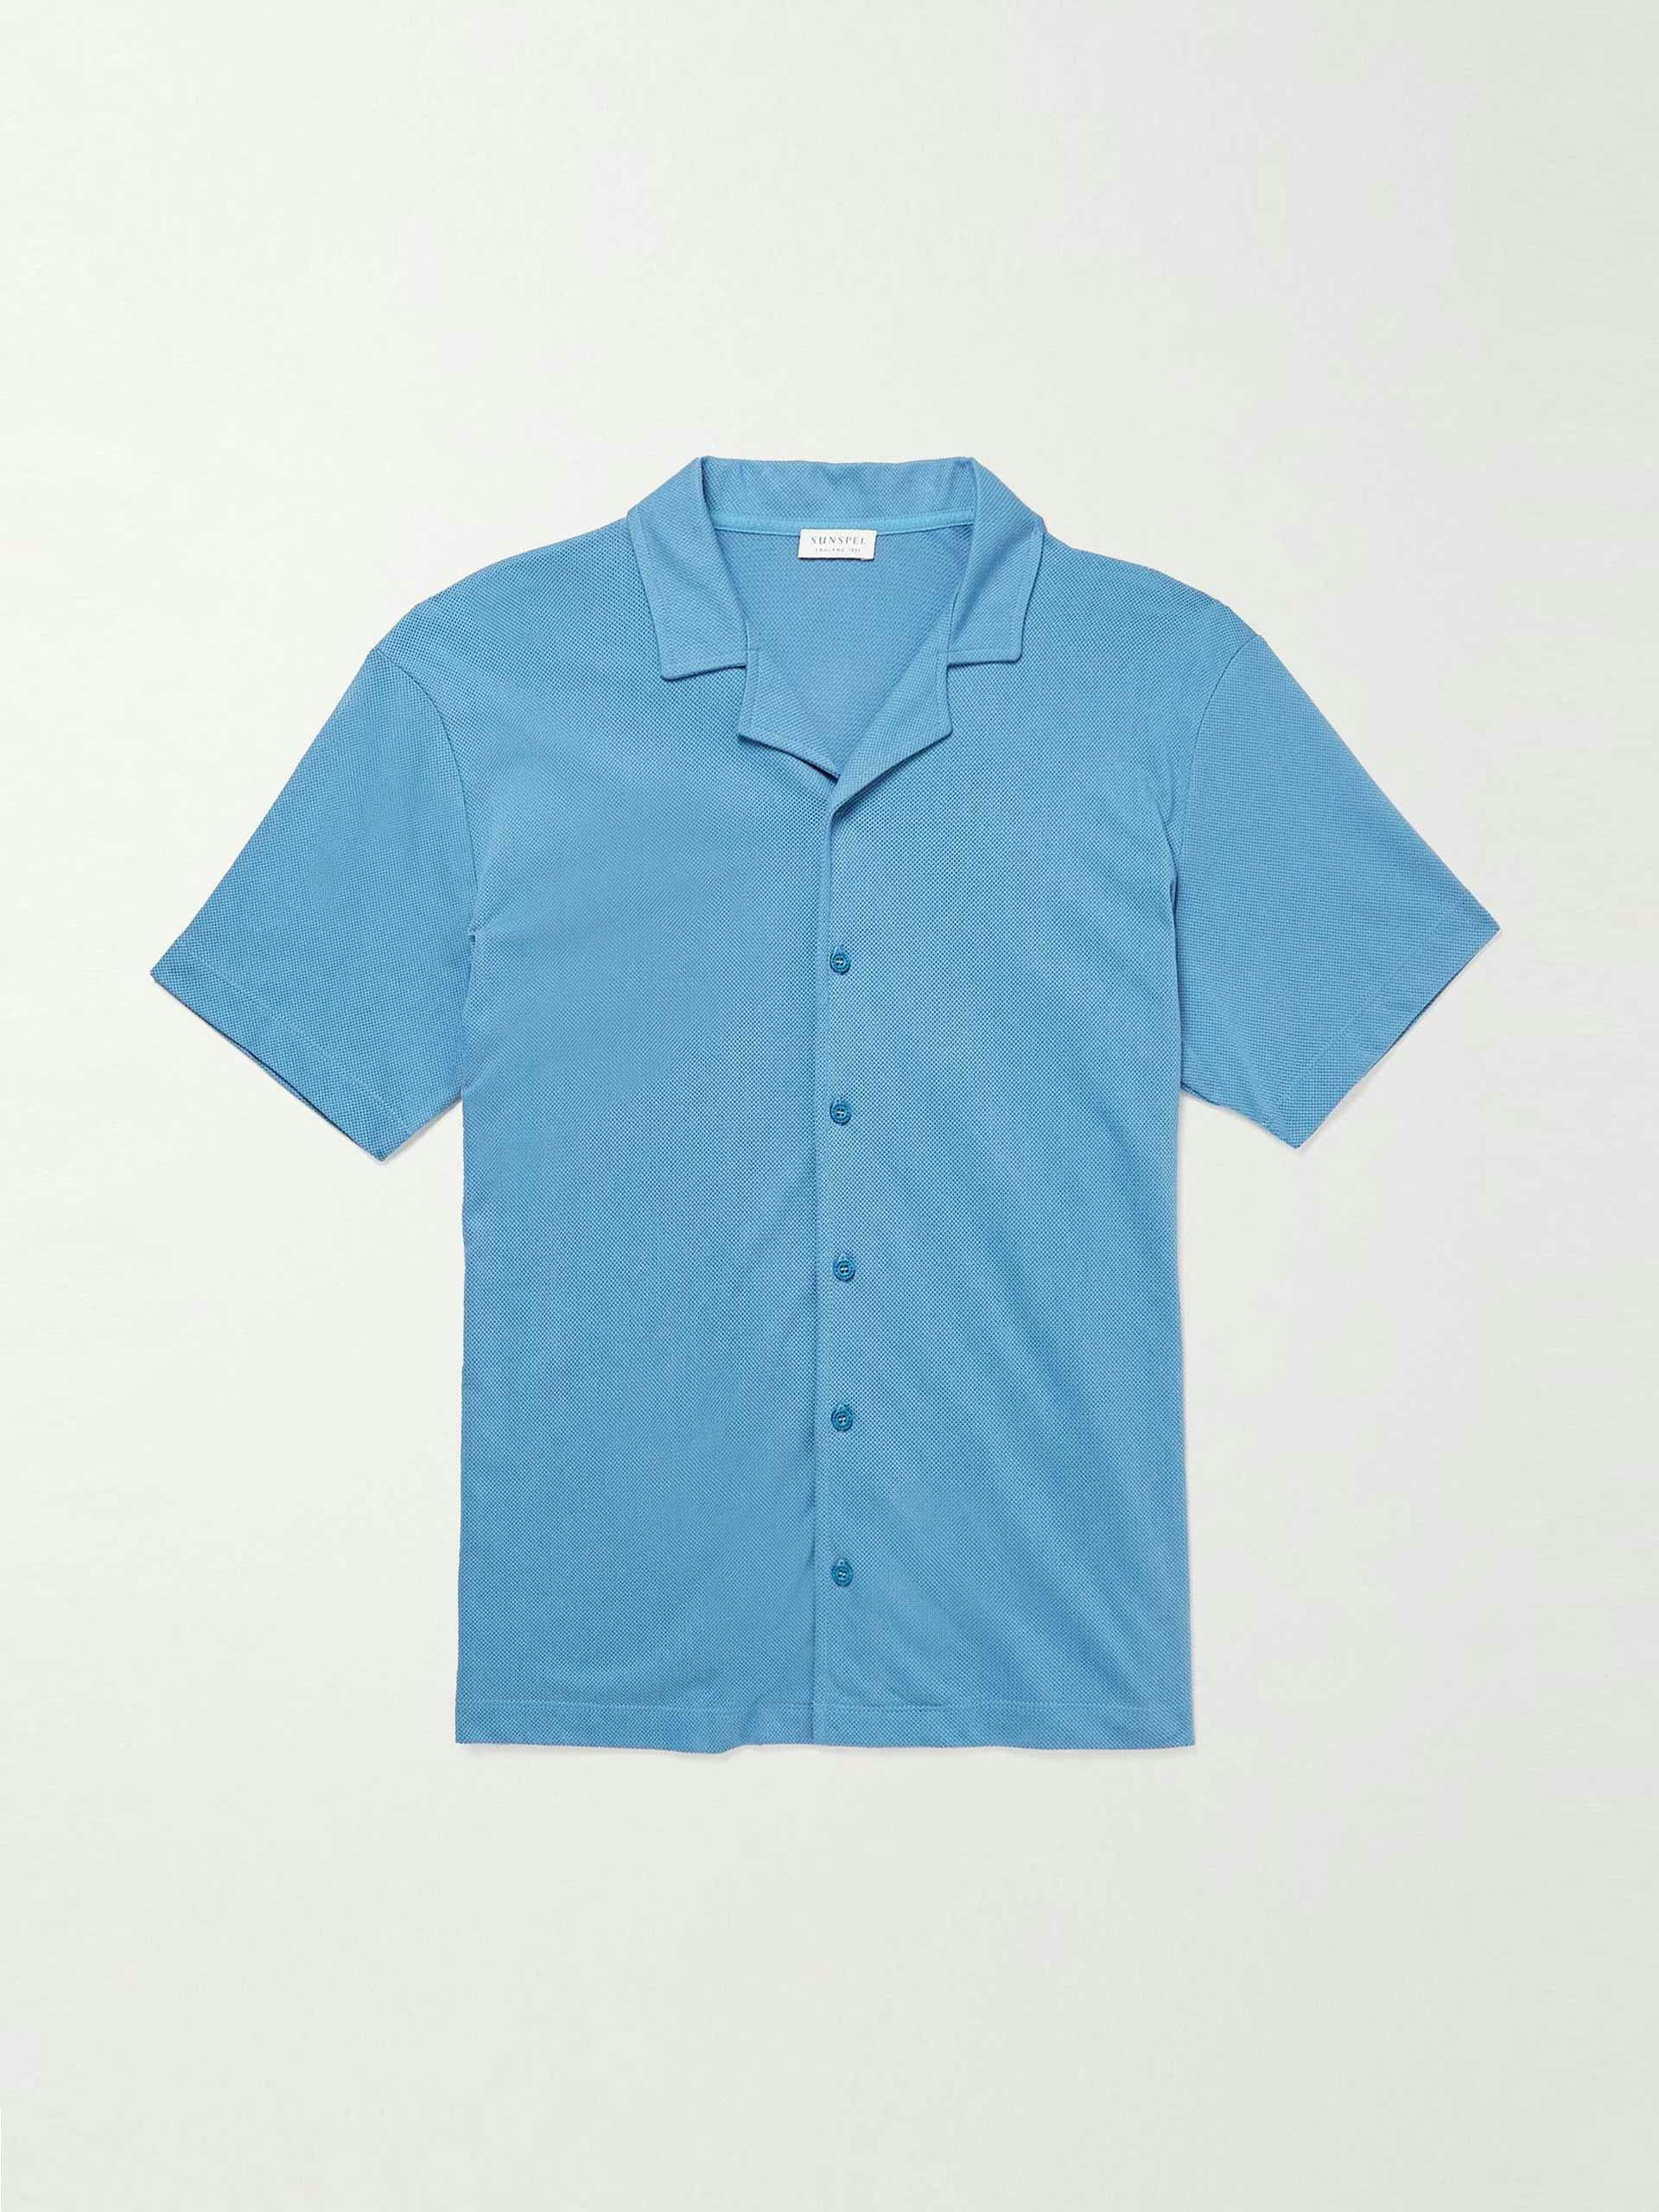 Blue cotton-mesh shirt